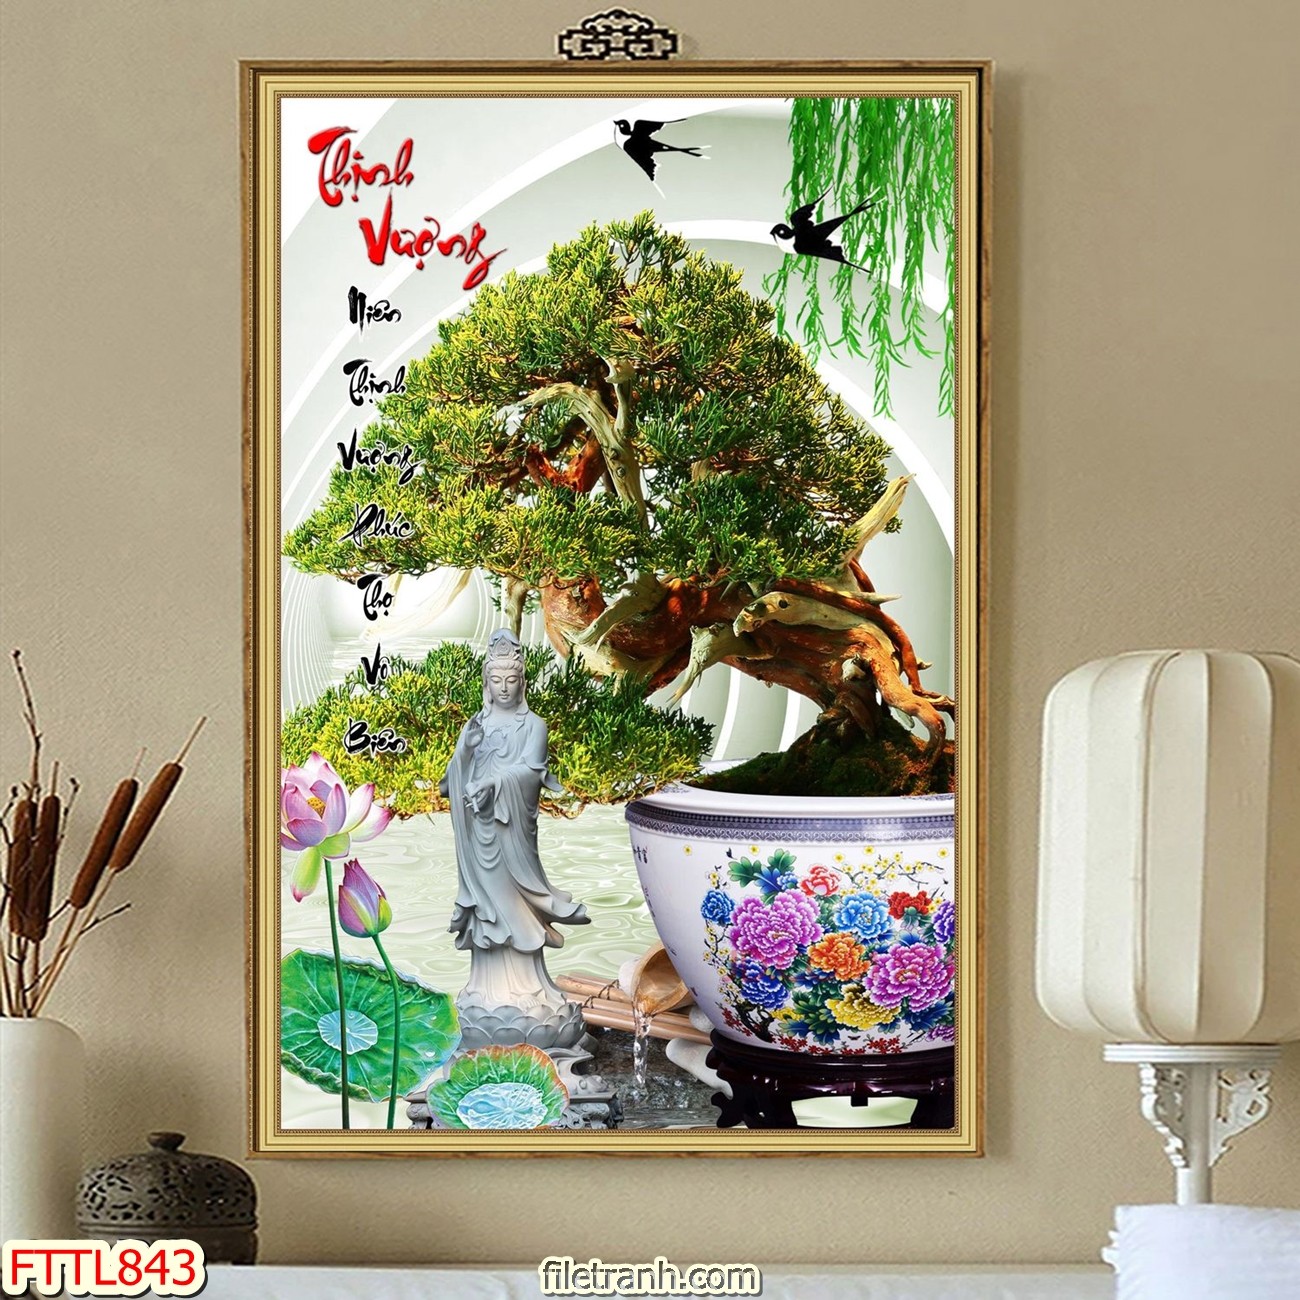 https://filetranh.com/file-tranh-chau-mai-bonsai/file-tranh-chau-mai-bonsai-fttl843.html